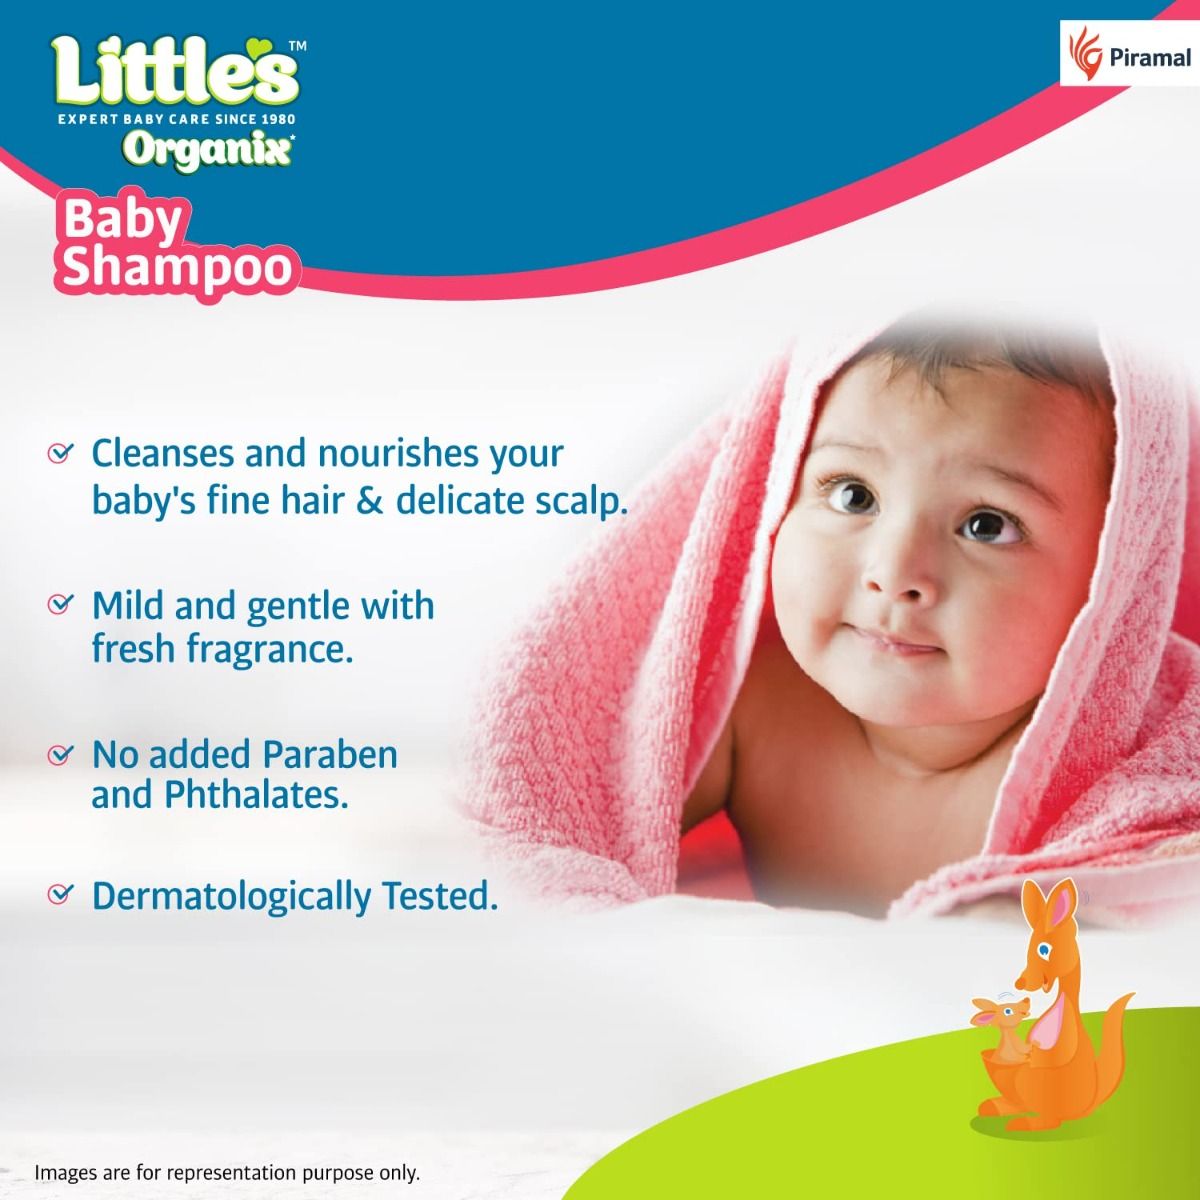 Little's Organix Baby Shampoo, 400 ml, Pack of 1 